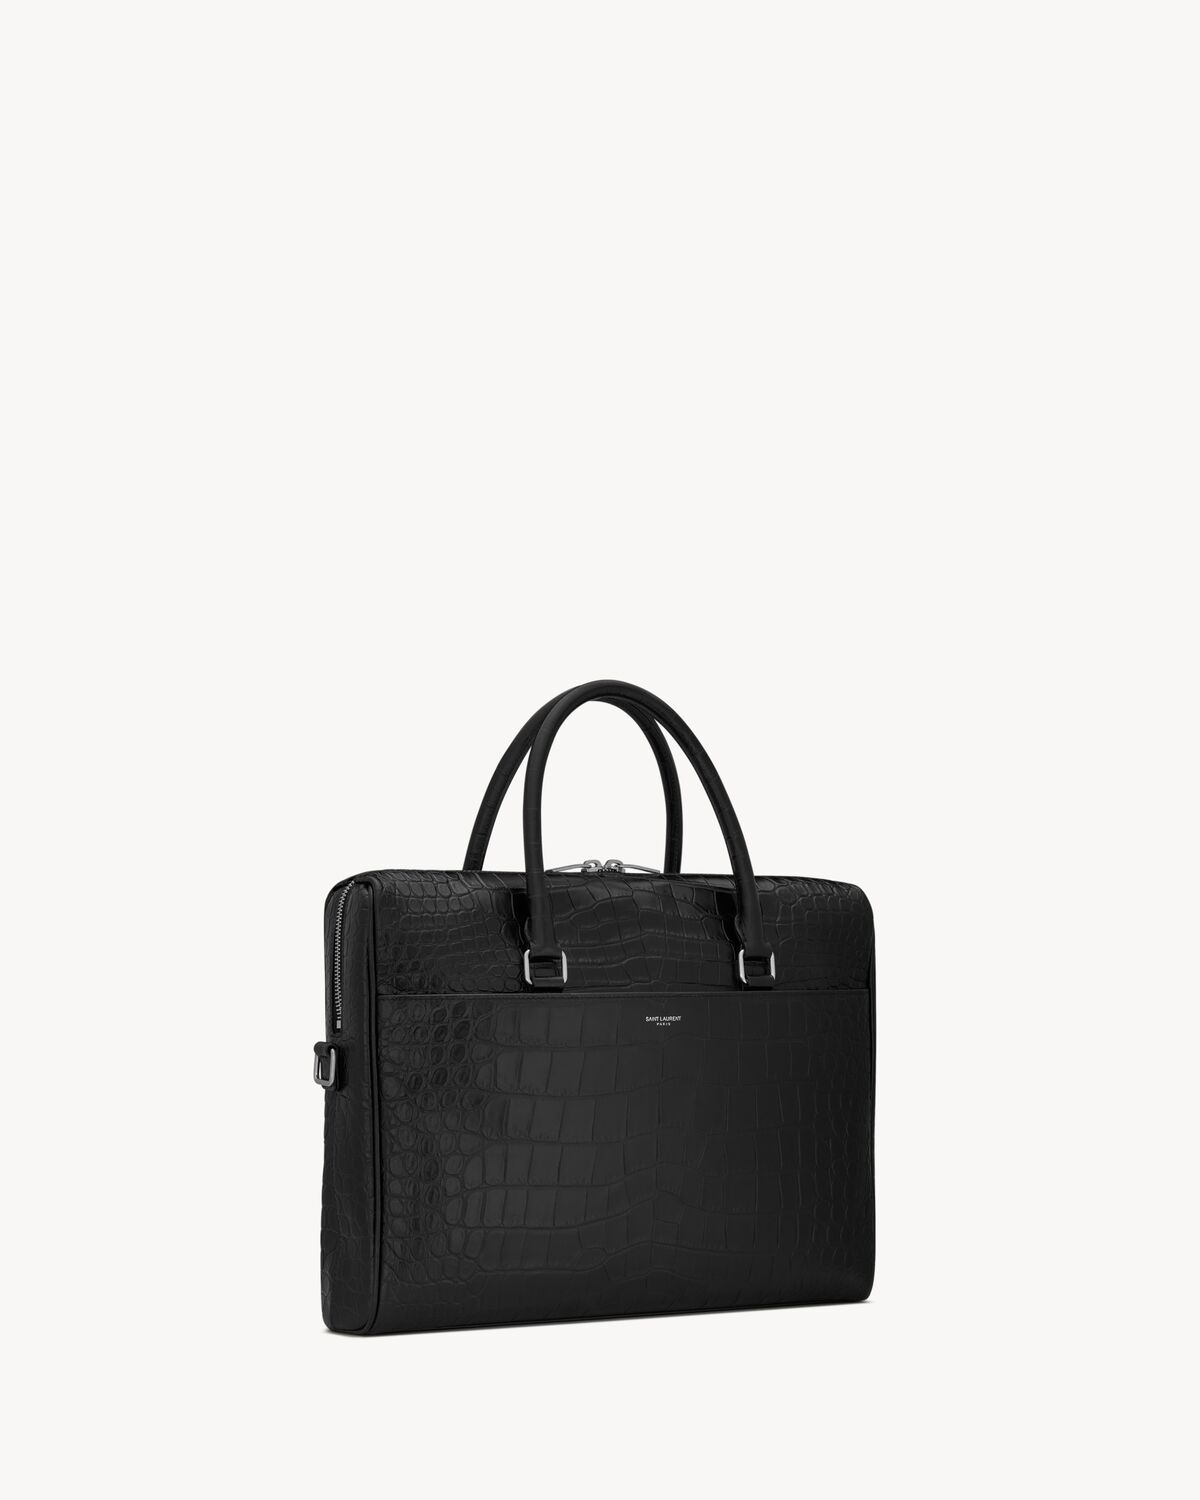 DUFFLE SAINT LAURENT briefcase bag in crocodile-embossed matte leather